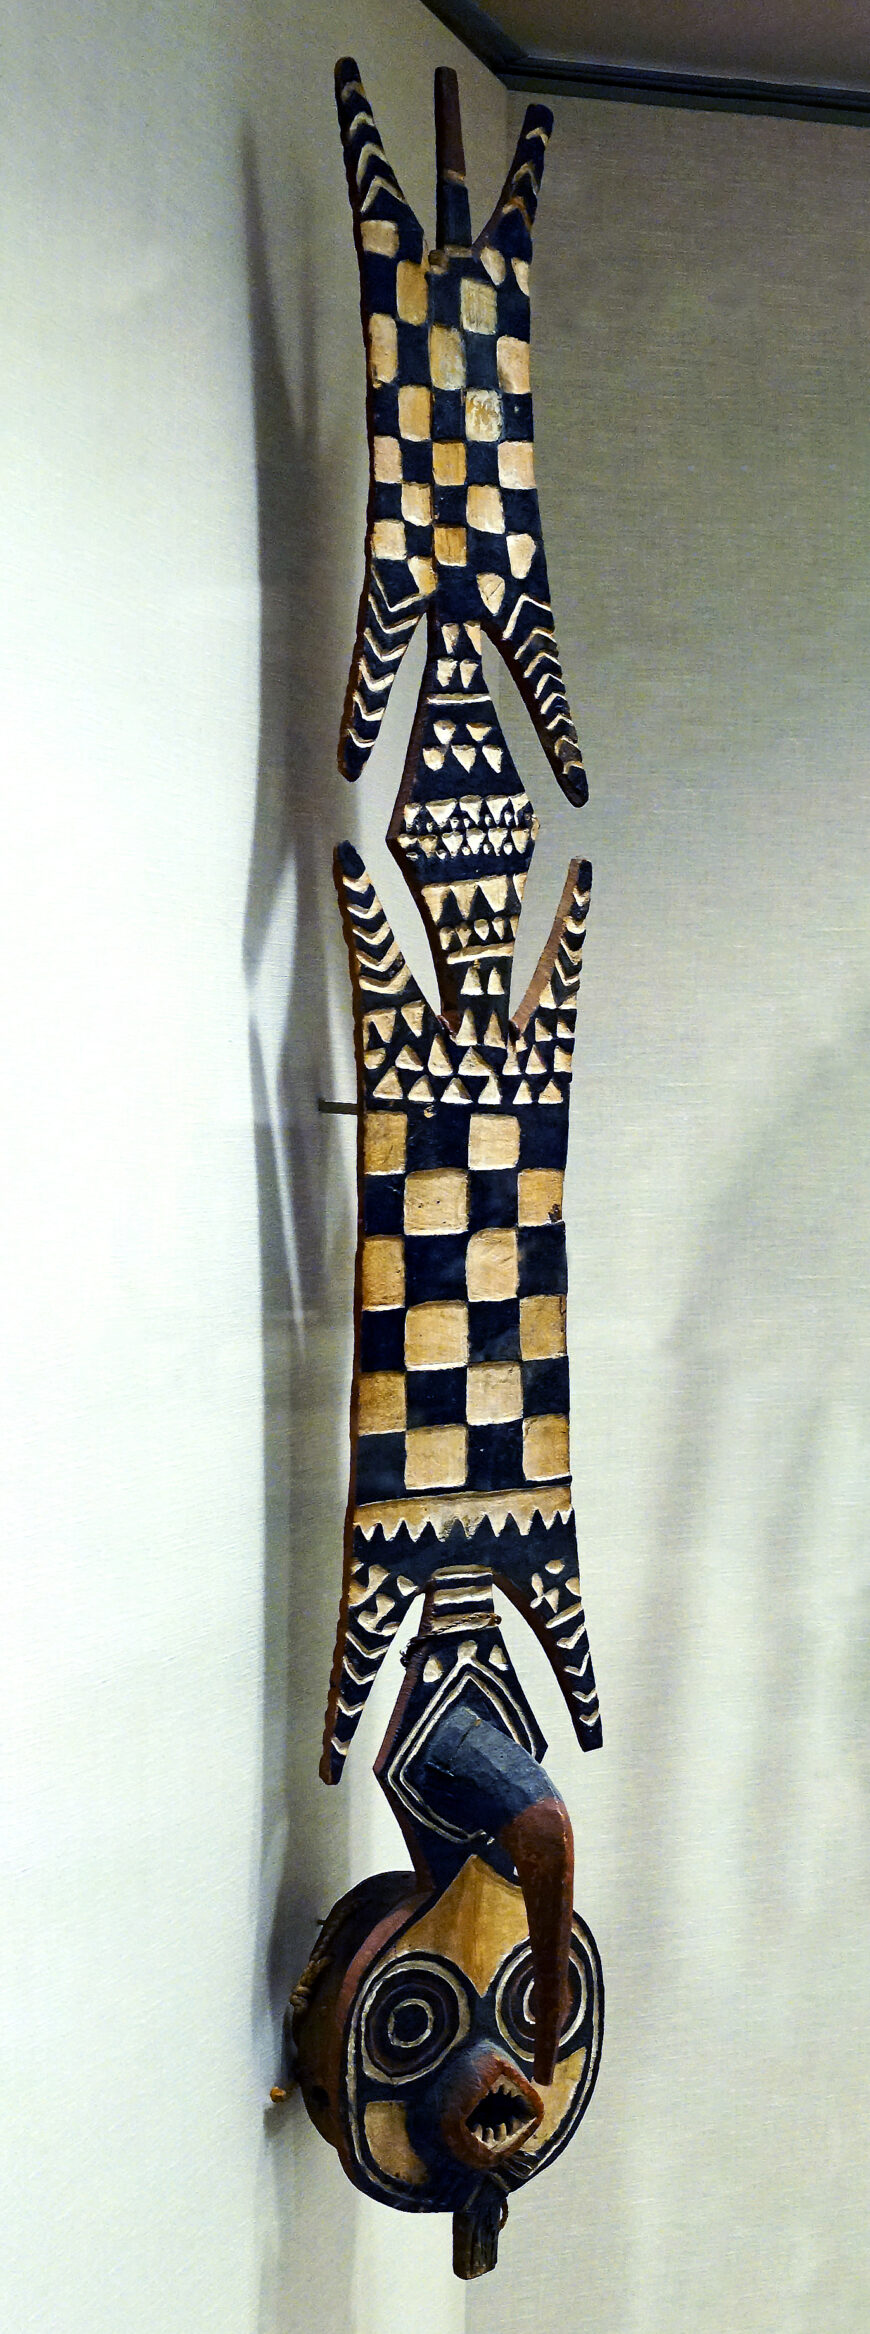 Mask (Nwantantay), 19th–20th century (Bwa peoples, Black Volta River region, Burkina Faso) wood, pigment, and fiber, 182.9 x 28.2 x 26 cm (The Metropolitan Museum of Art, New York; photo: Steven Zucker, CC BY-NC-SA 2.0)